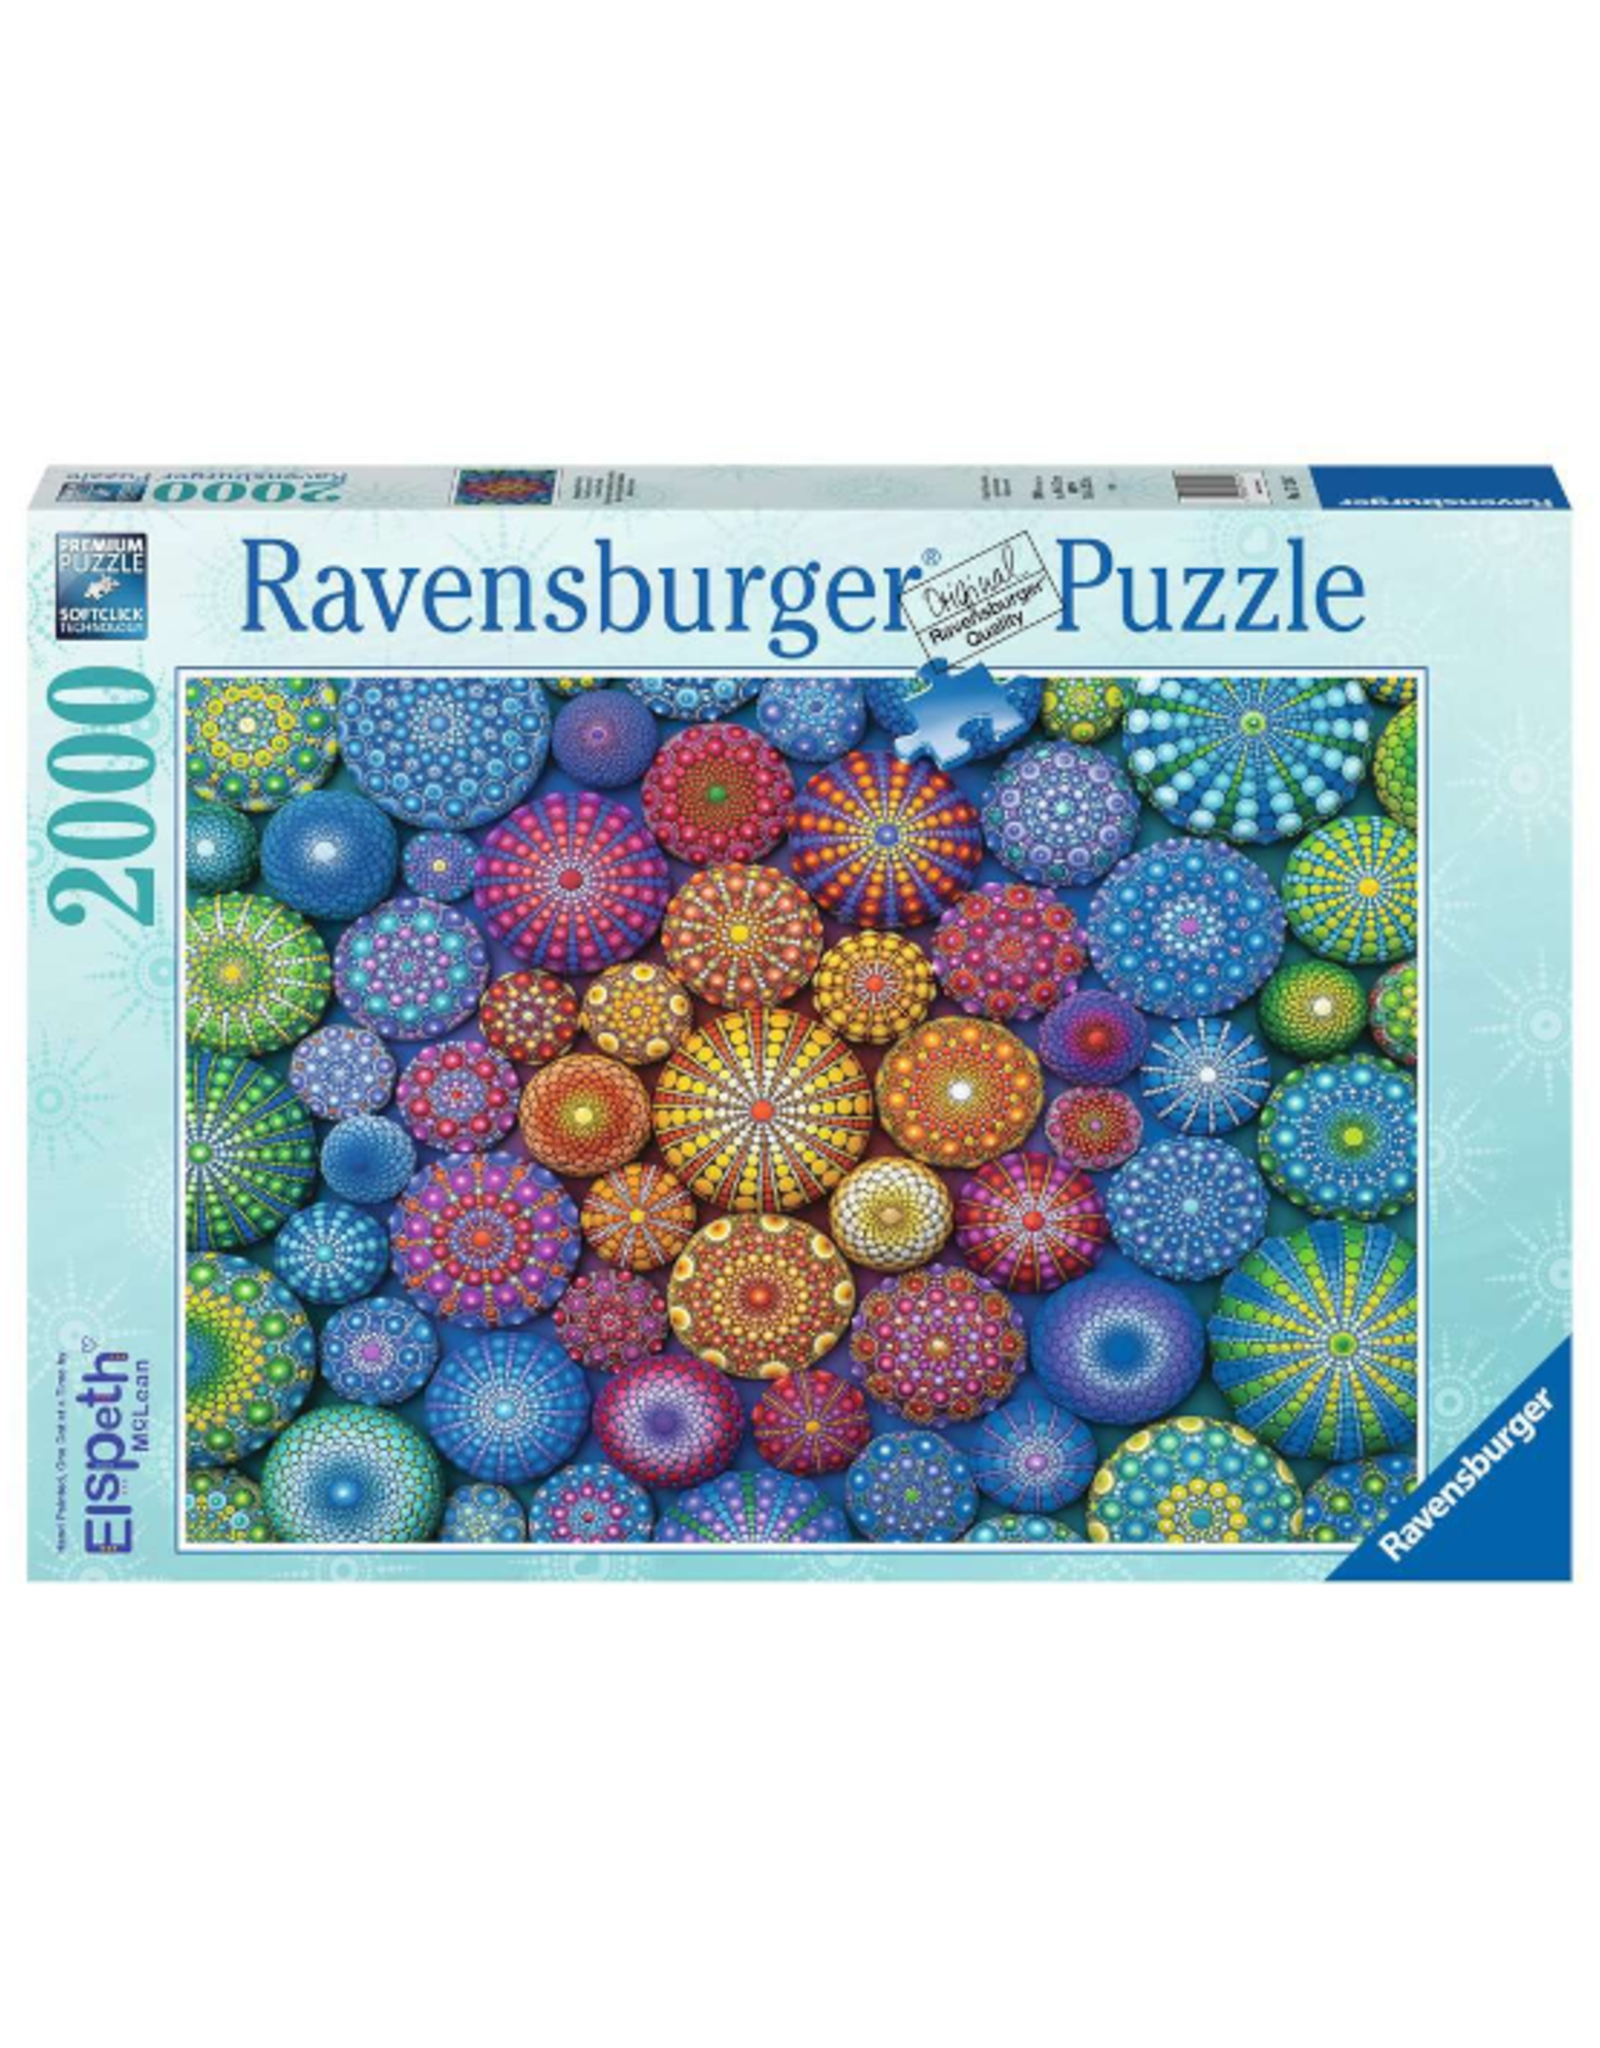 Ravensburger Ravensburger - 2000pcs - Elspeth McLean: Radiating Rainbow Mandalas